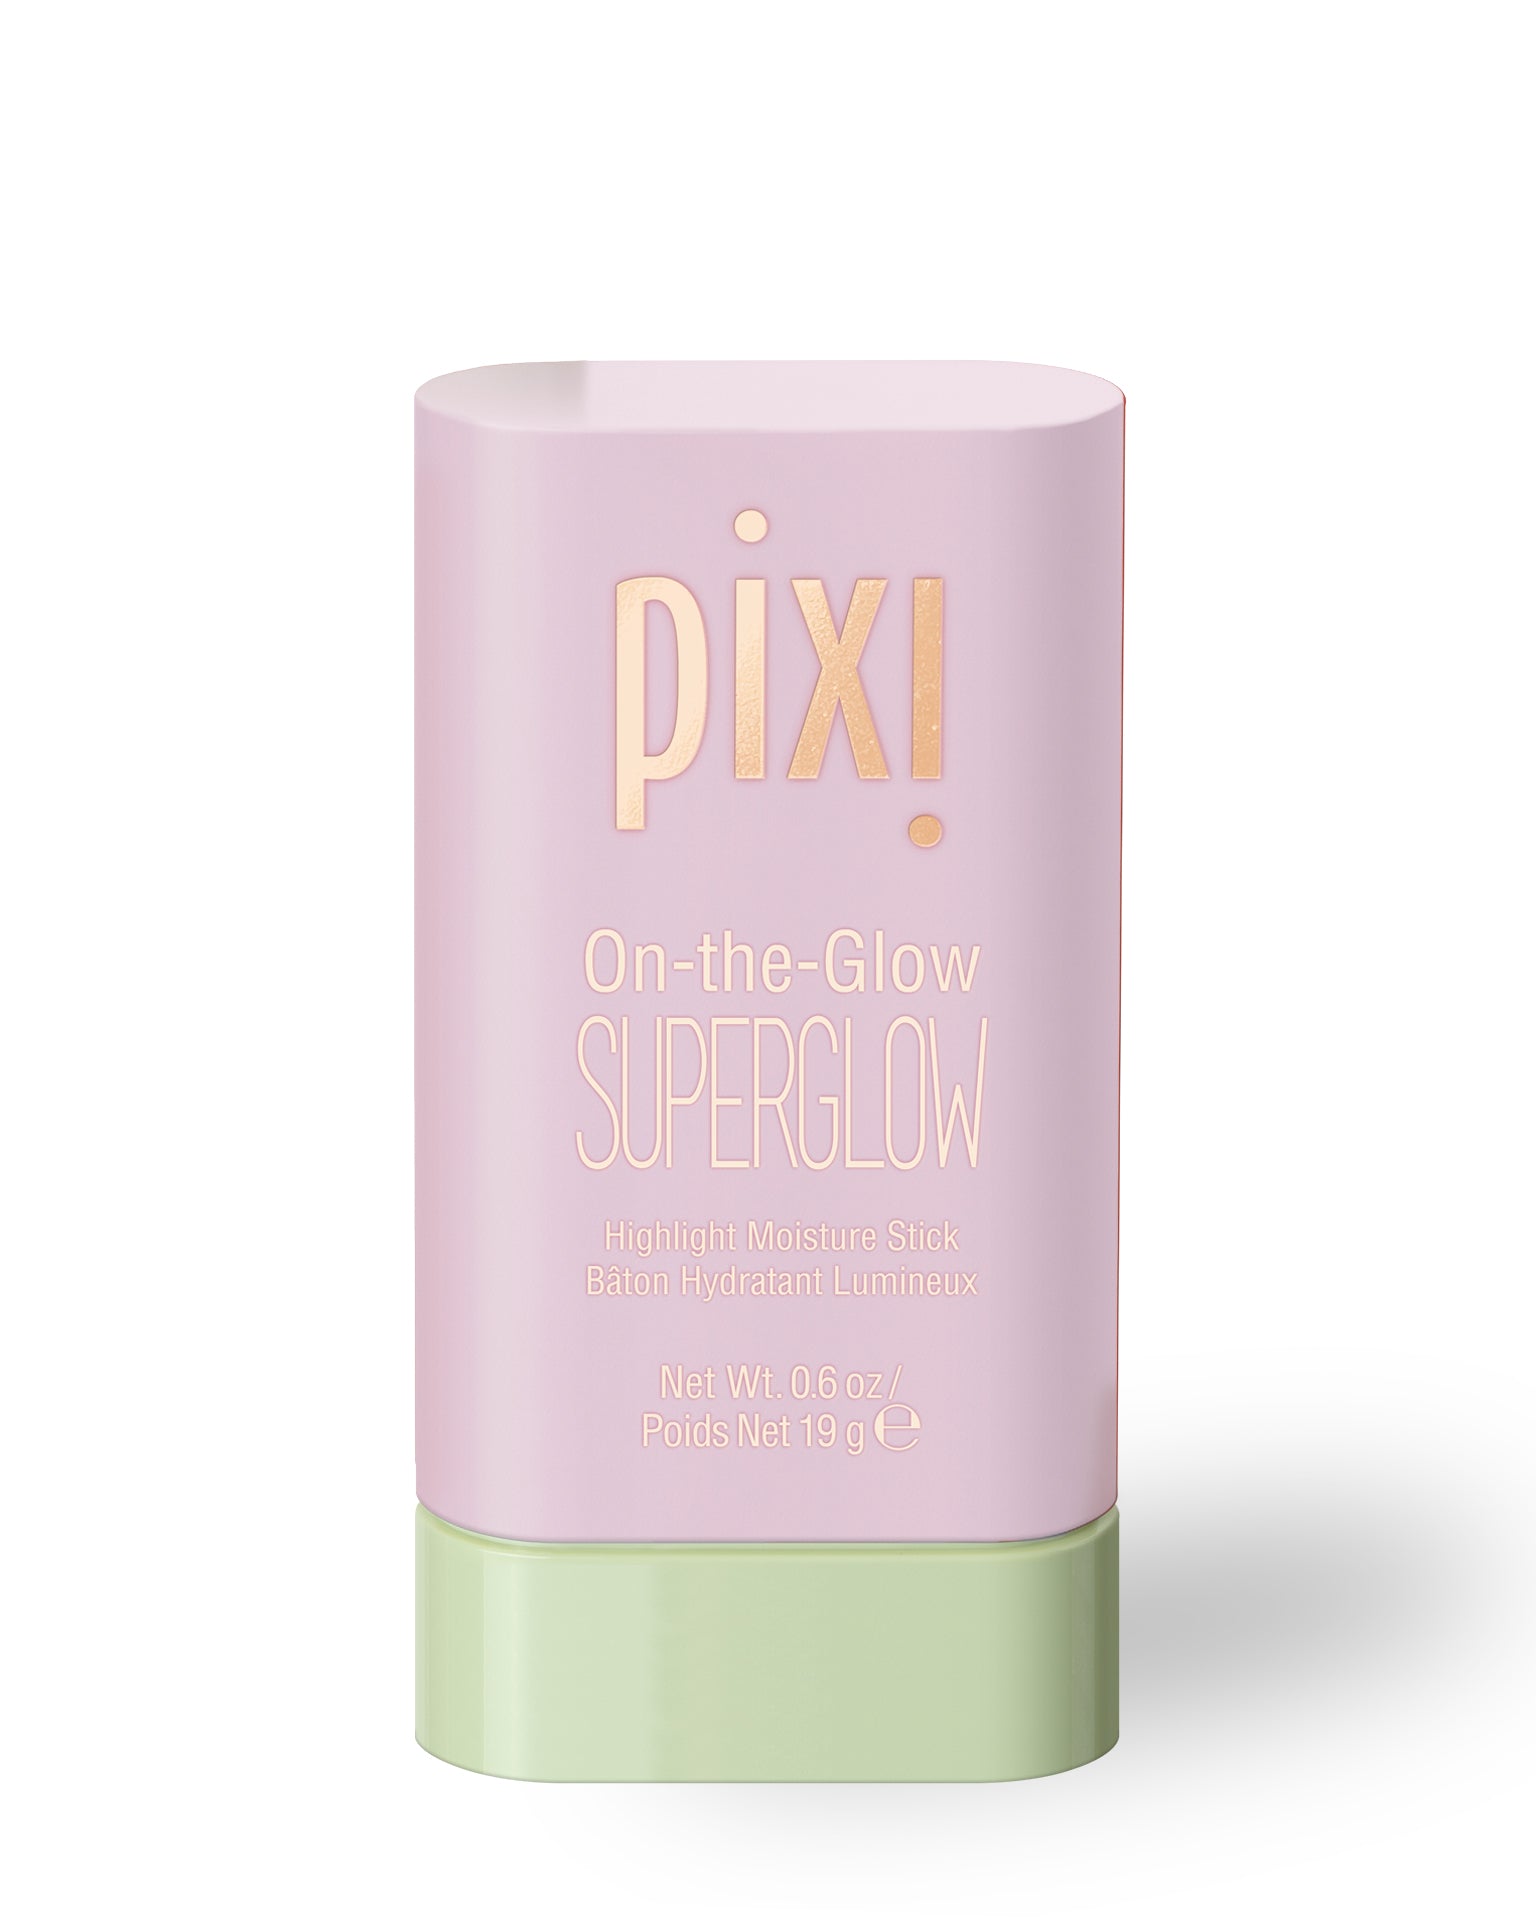 Pixi On-the-Glow SuperGlow